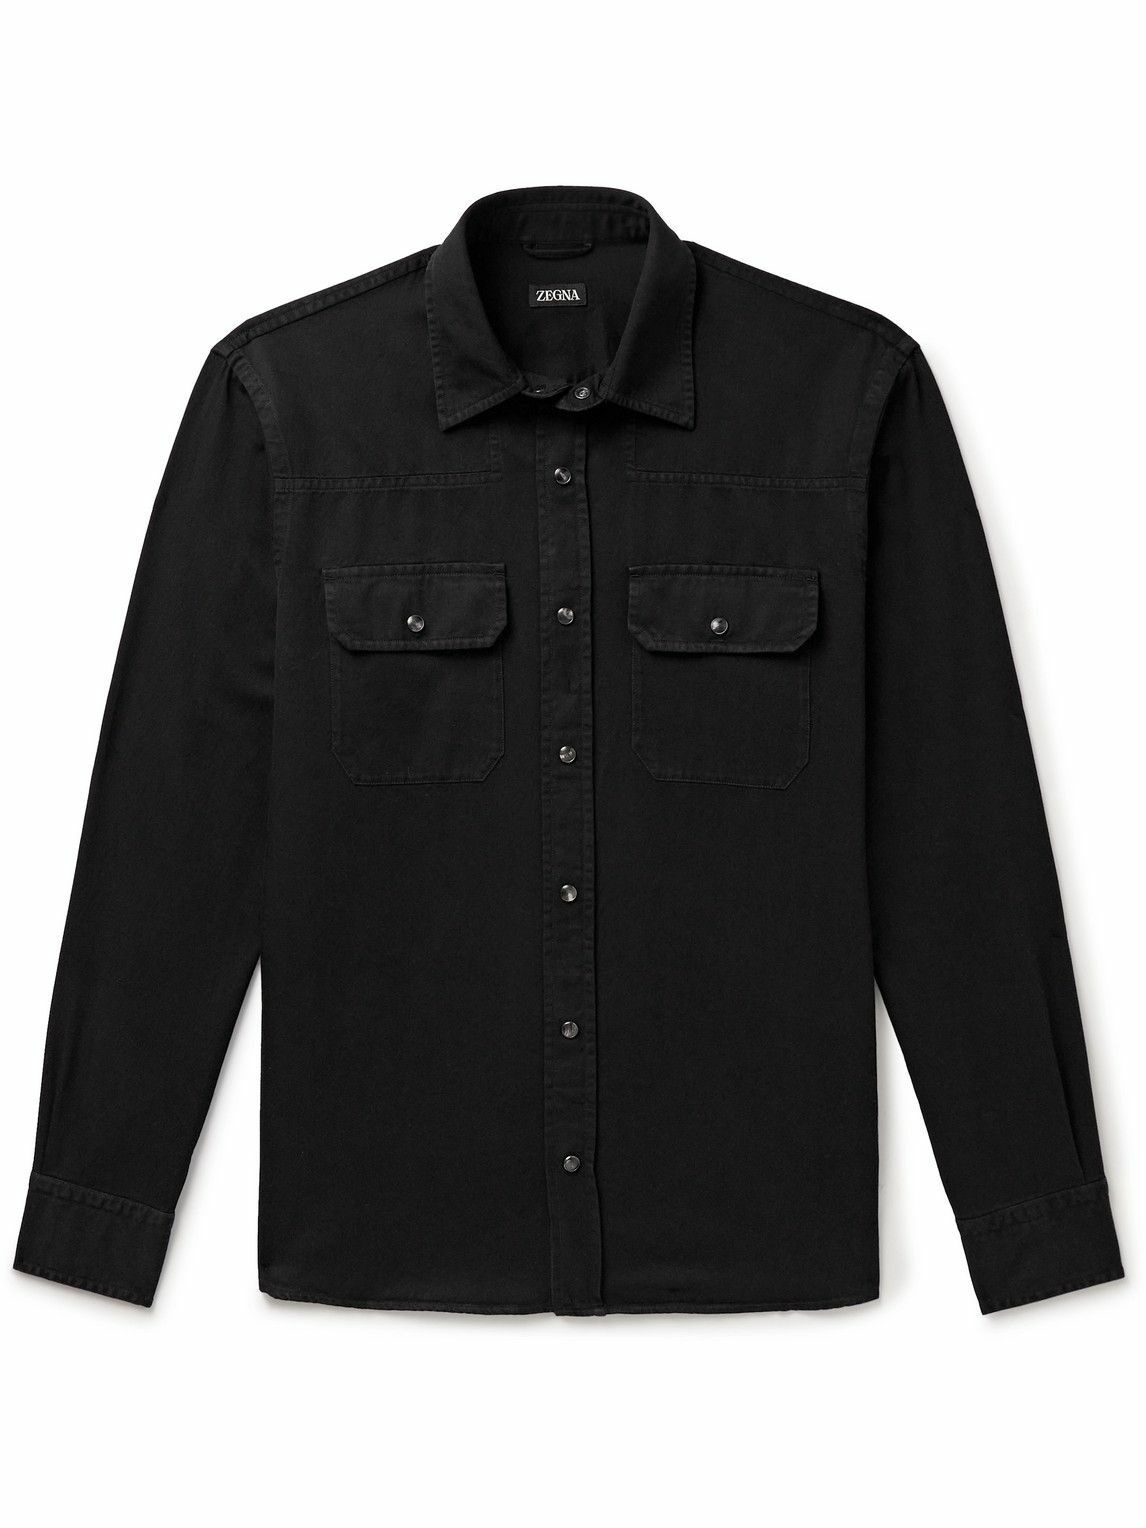 Zegna - Cotton-Twill Western Shirt - Black Zegna